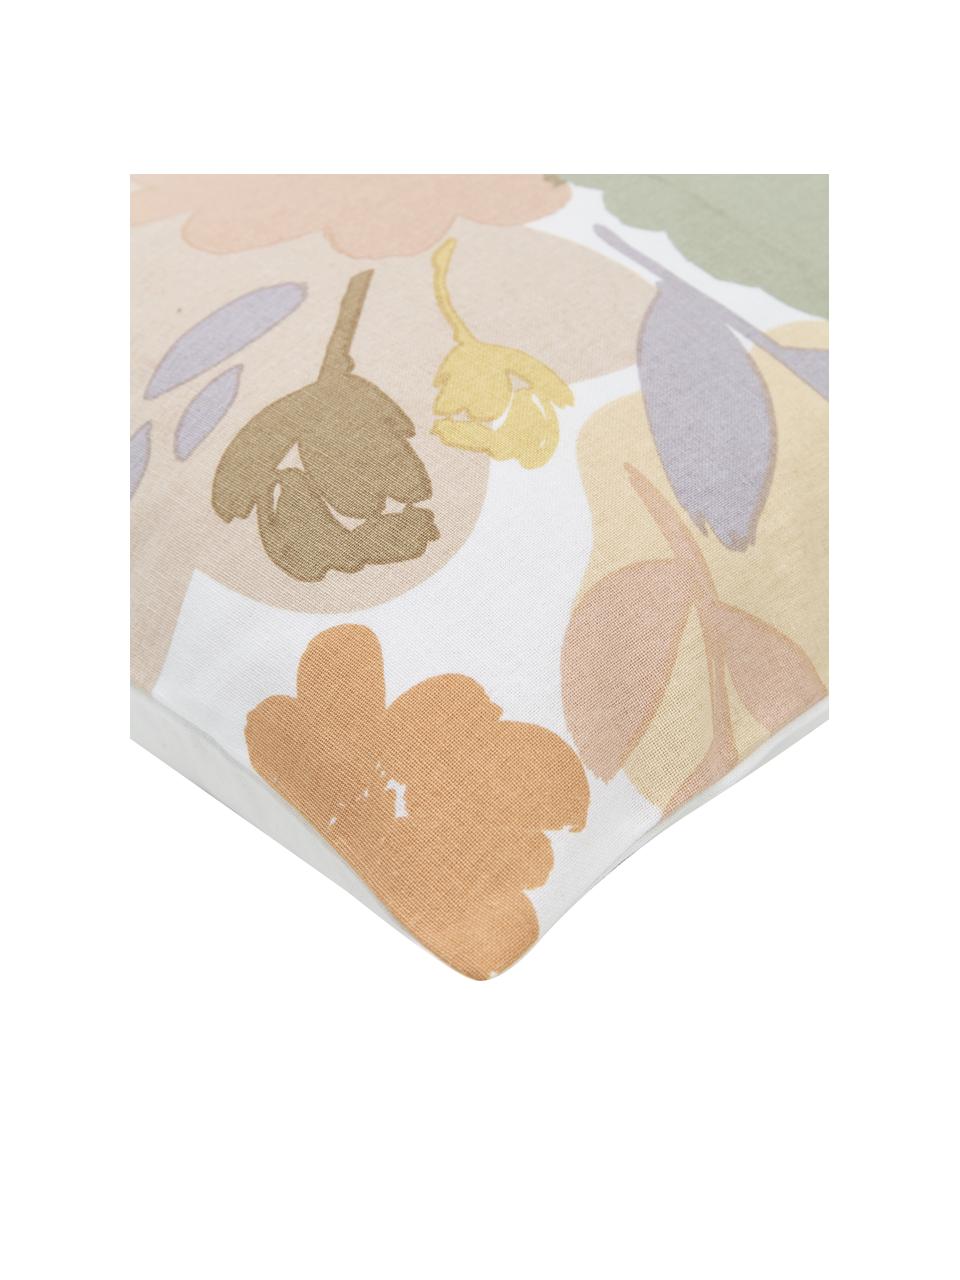 Baumwoll-Kissenhülle Penelope mit Blumenmotiv, 100% Baumwolle, Bunt, B 50 x L 50 cm